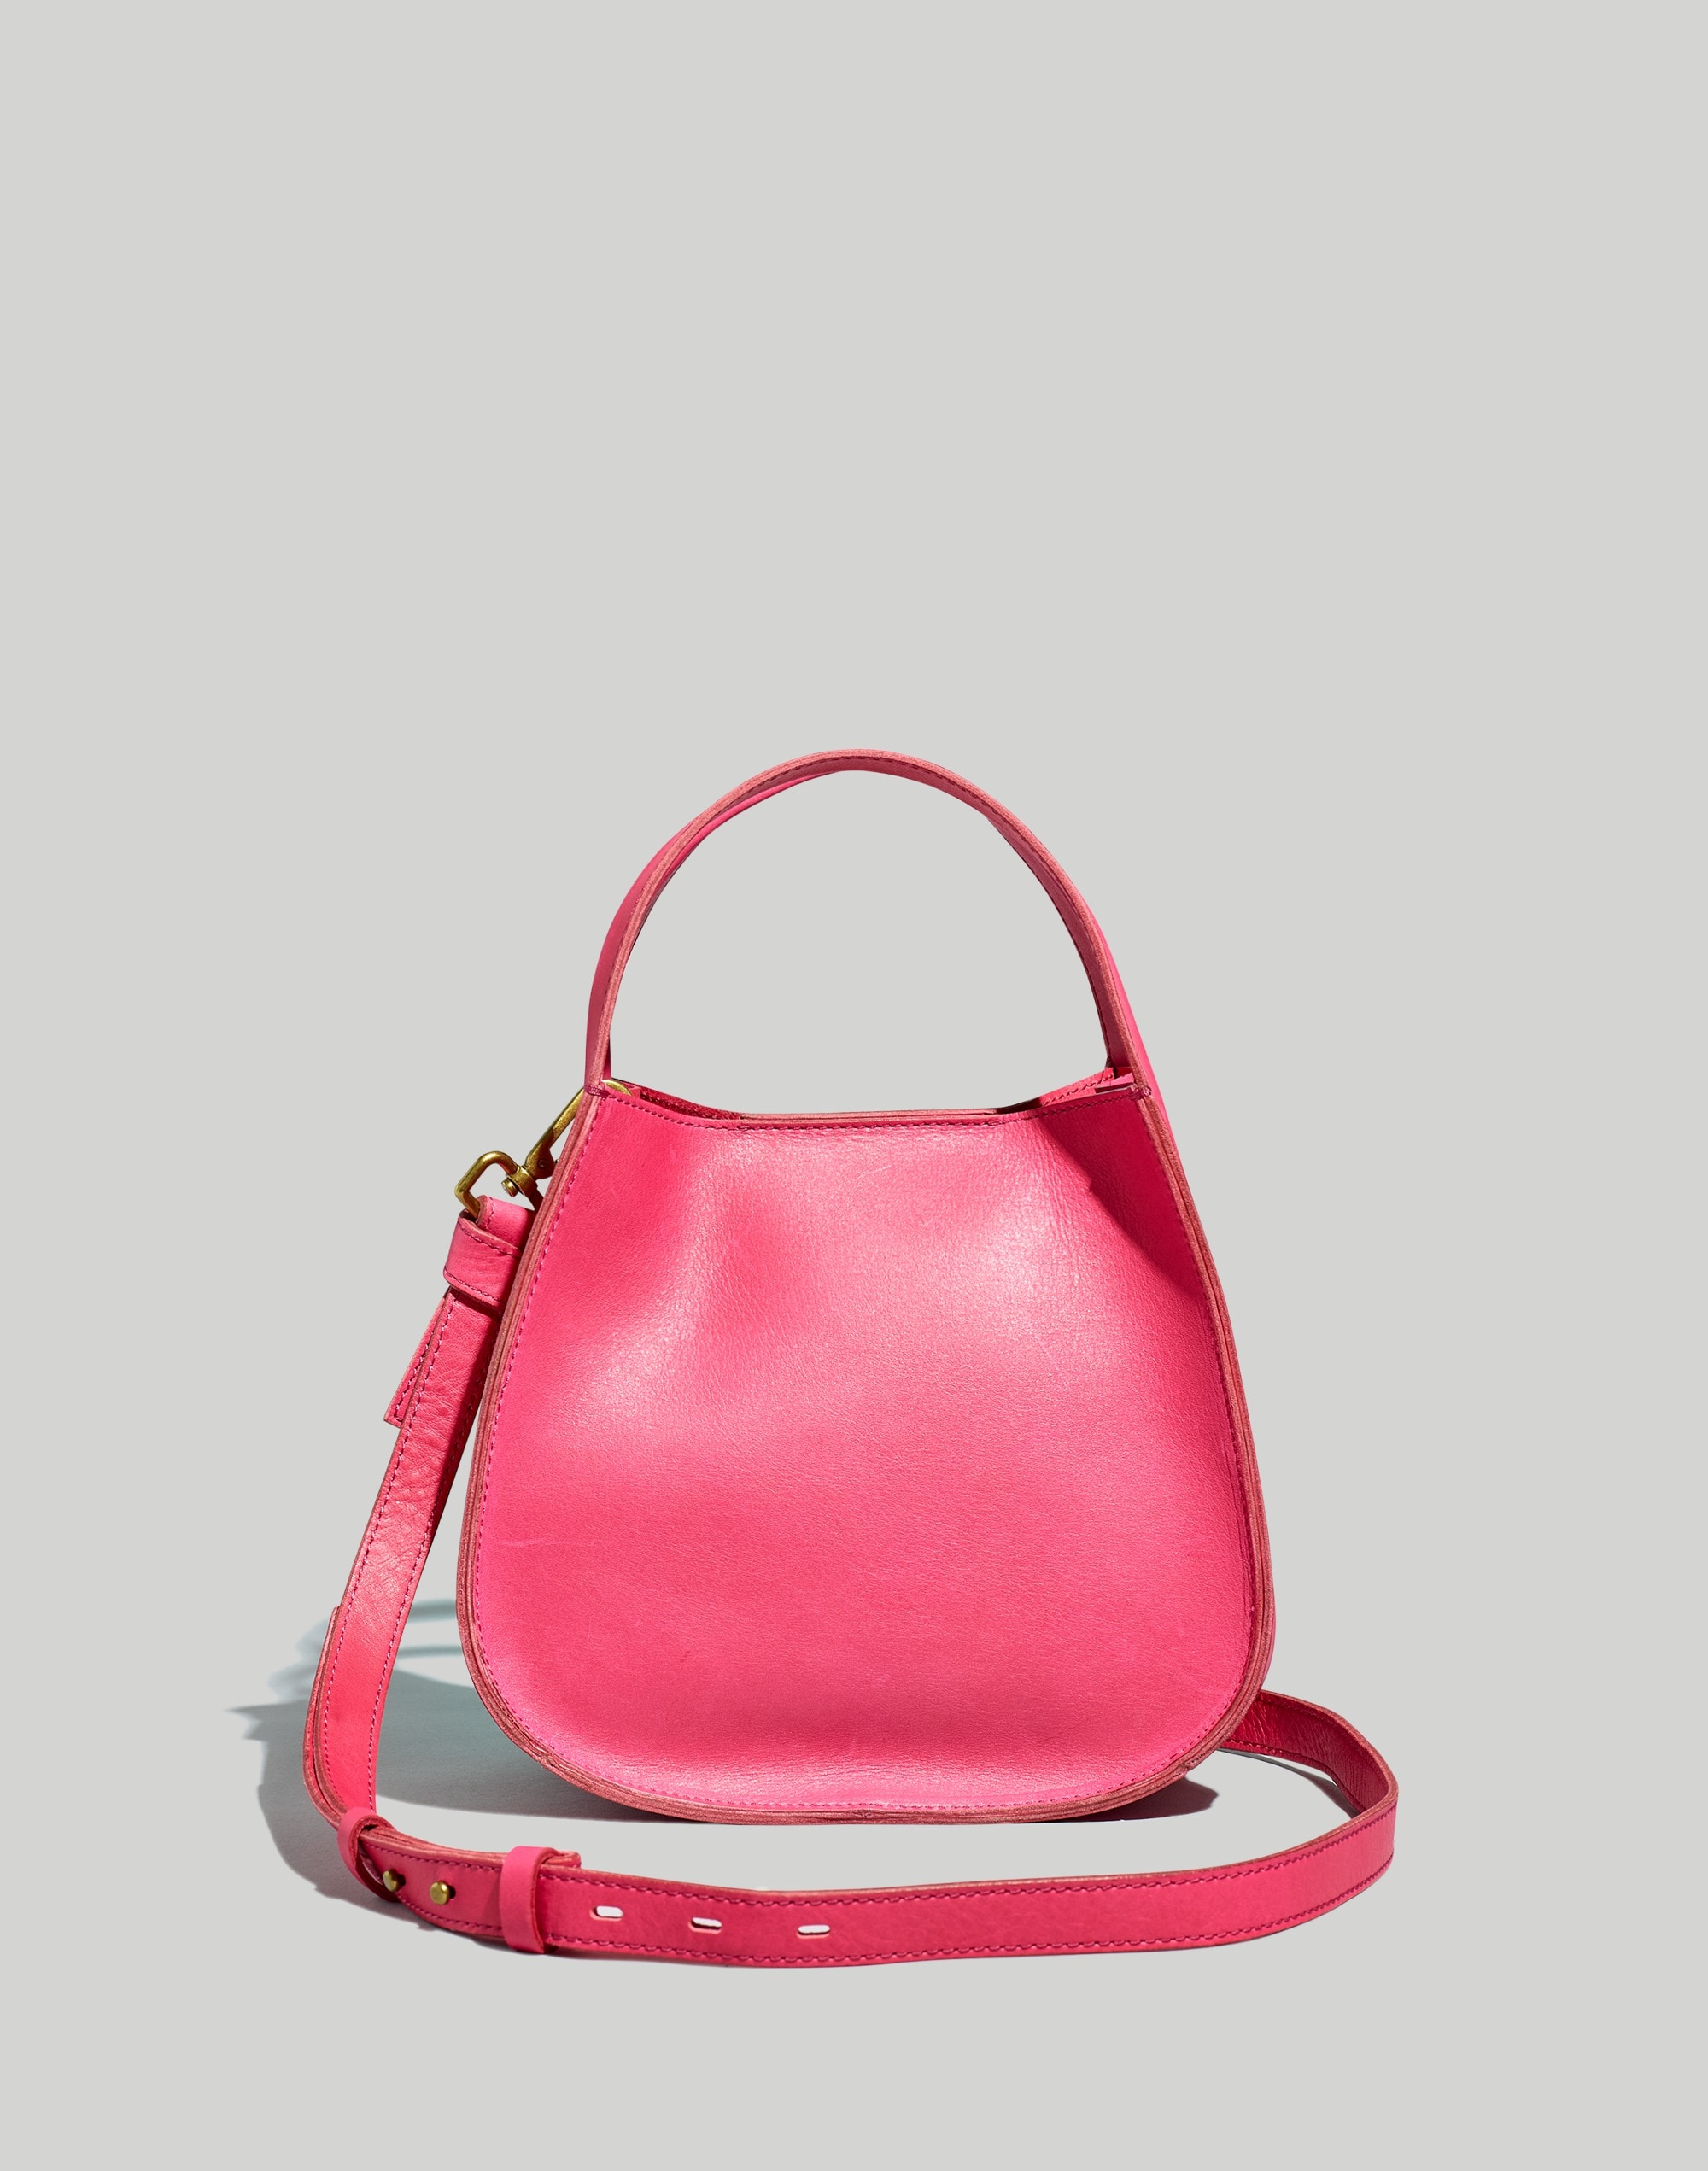 Mw The Sydney Crossbody Bag In Rosy Hibiscus